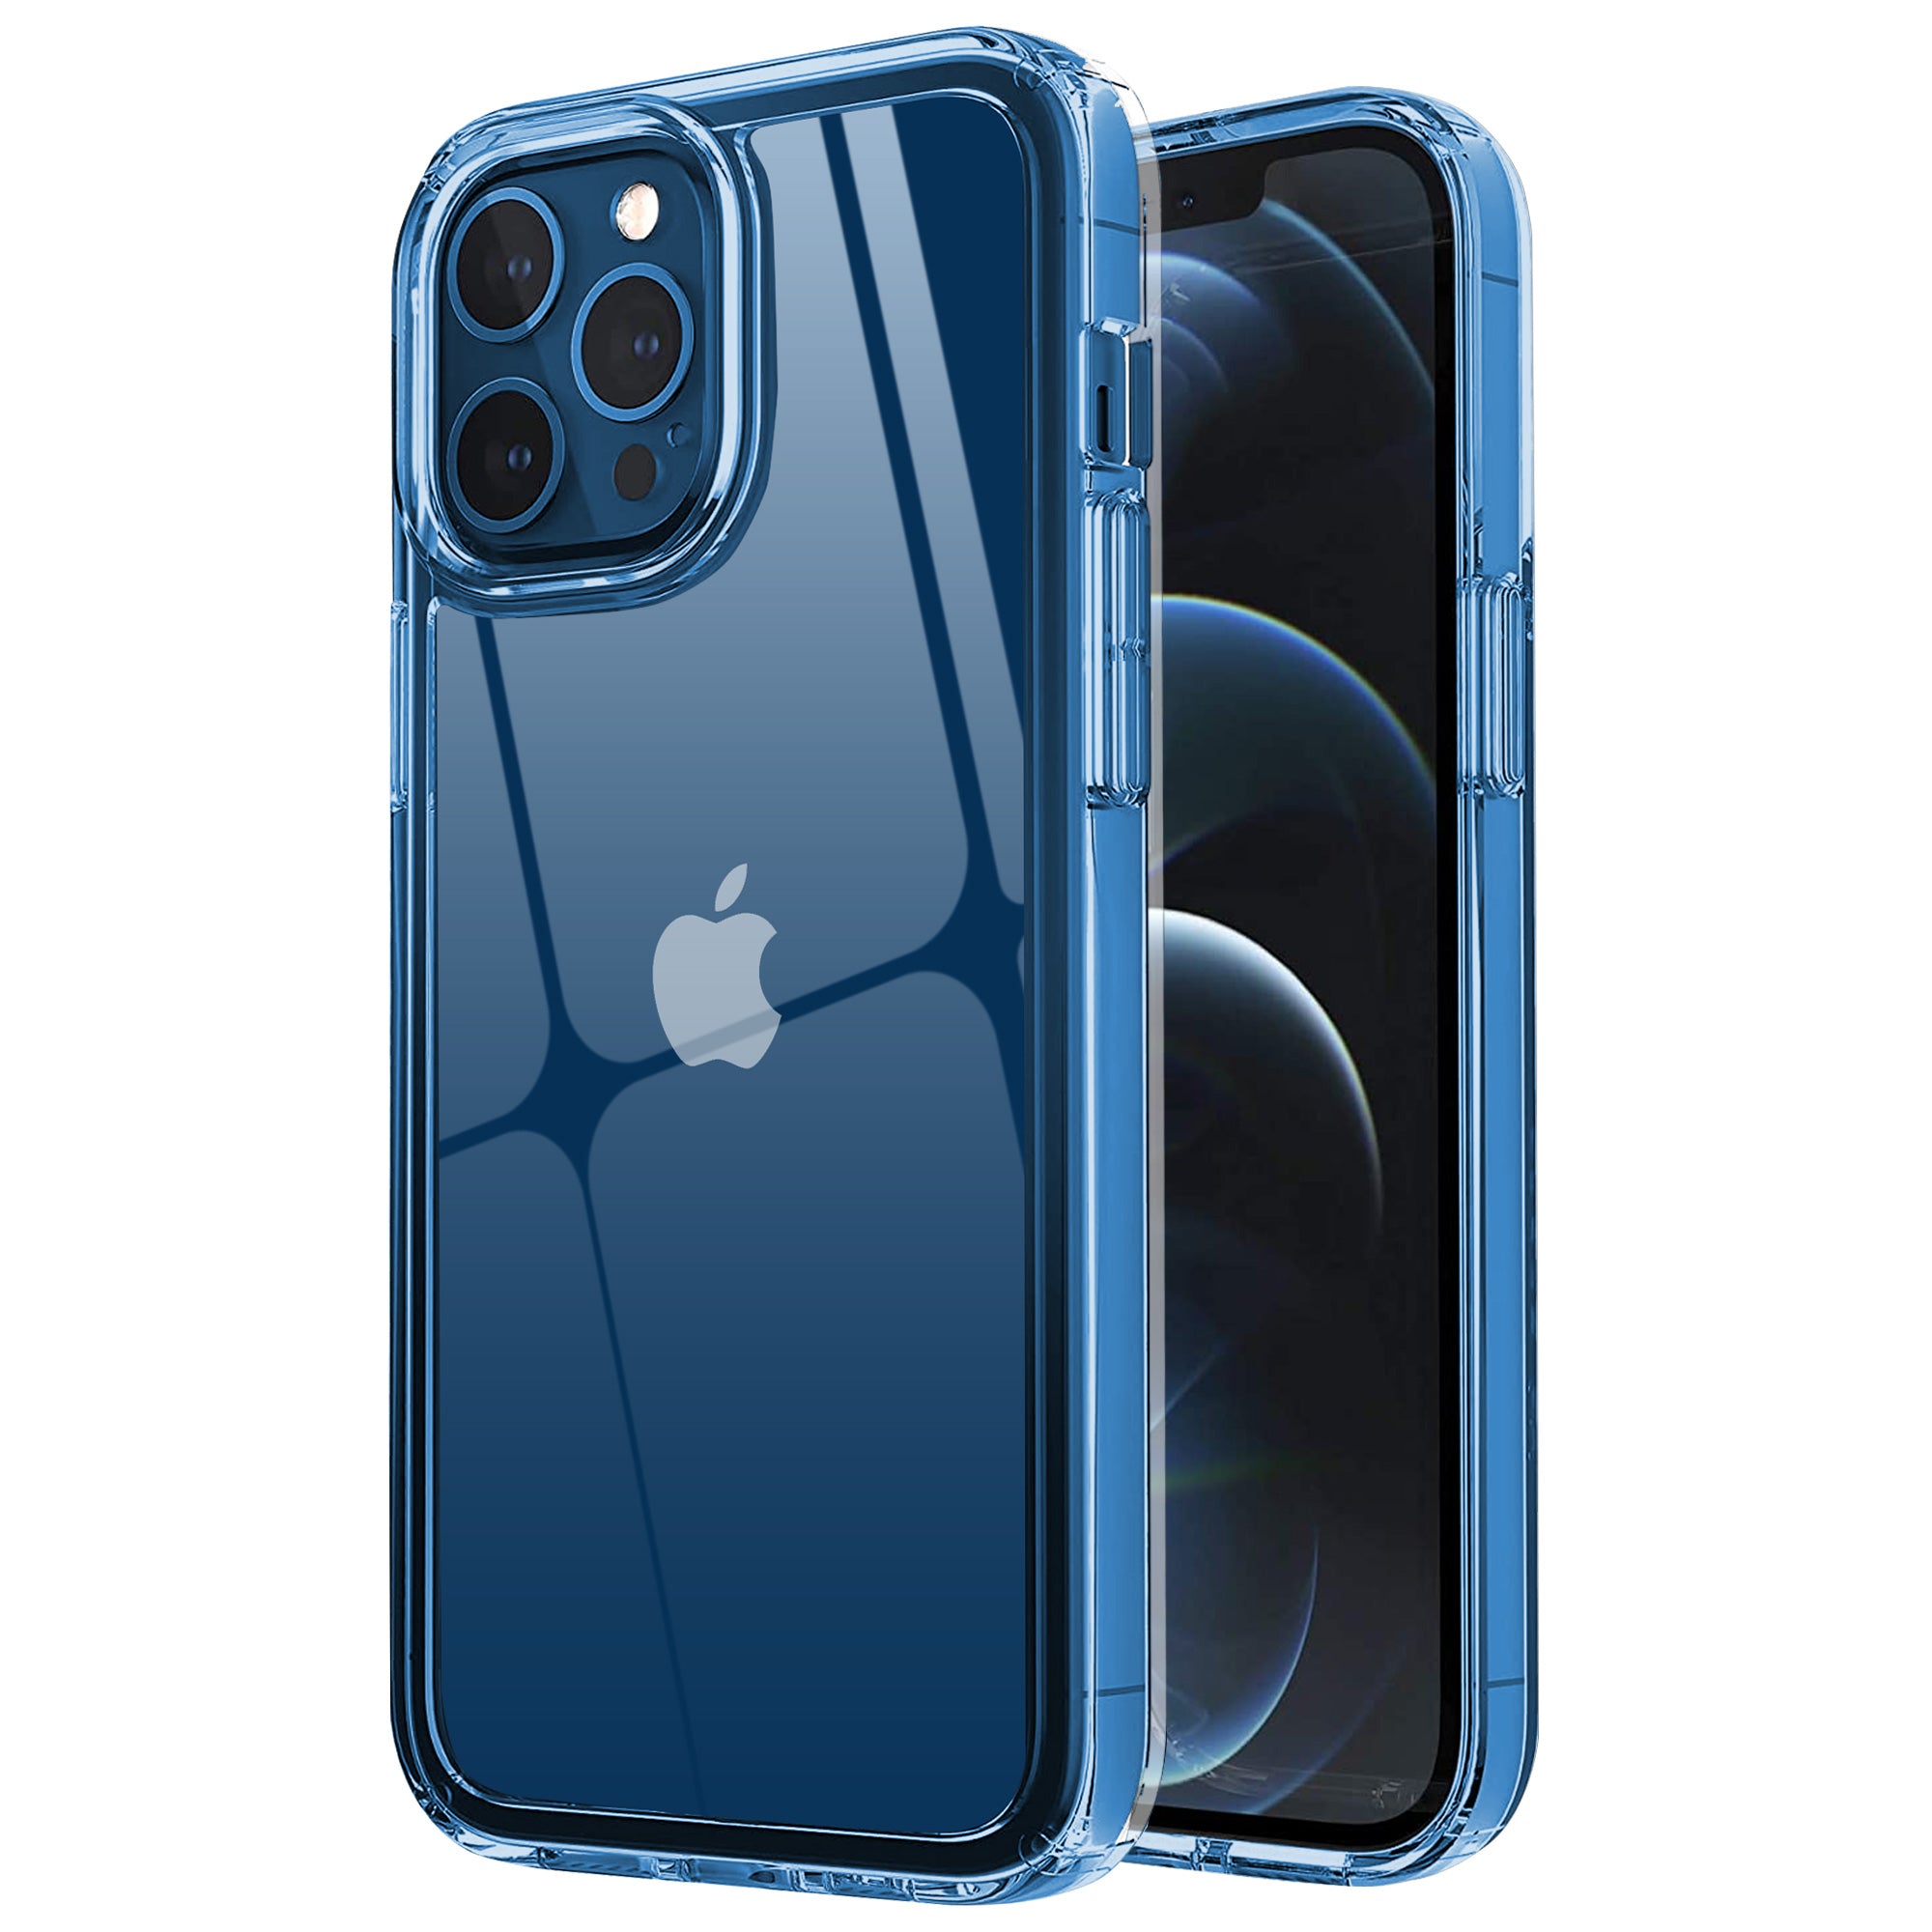 Apple iPhone 12 / iPhone 12 Pro Case Transparent Cover